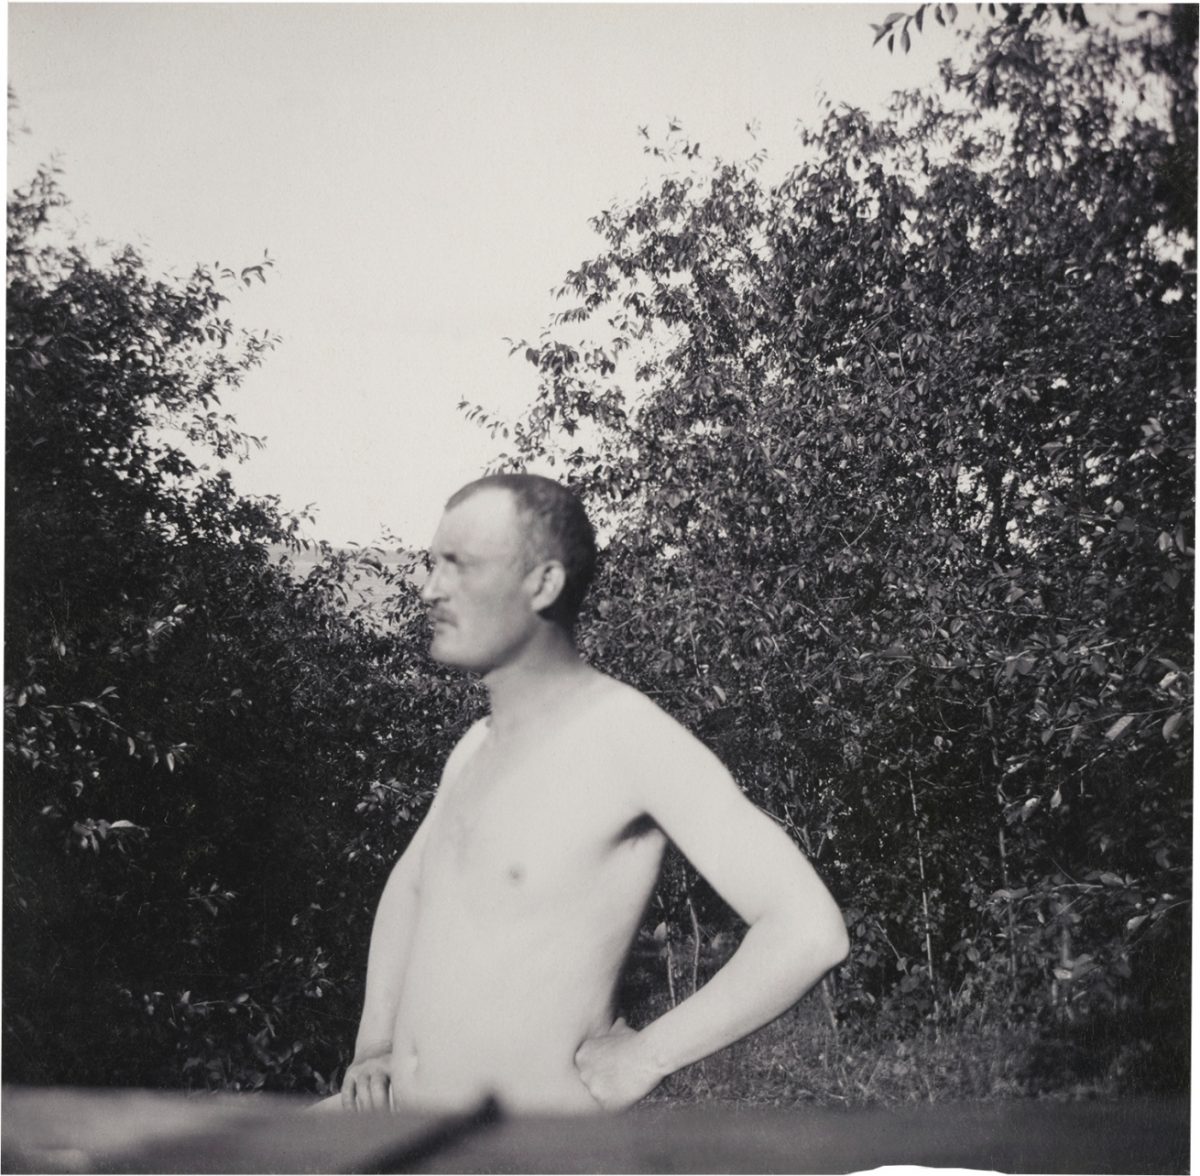 Edvard Munch (Norwegian, 1863-1944) Nude Self-Portrait, Åsgårdstrand 1904